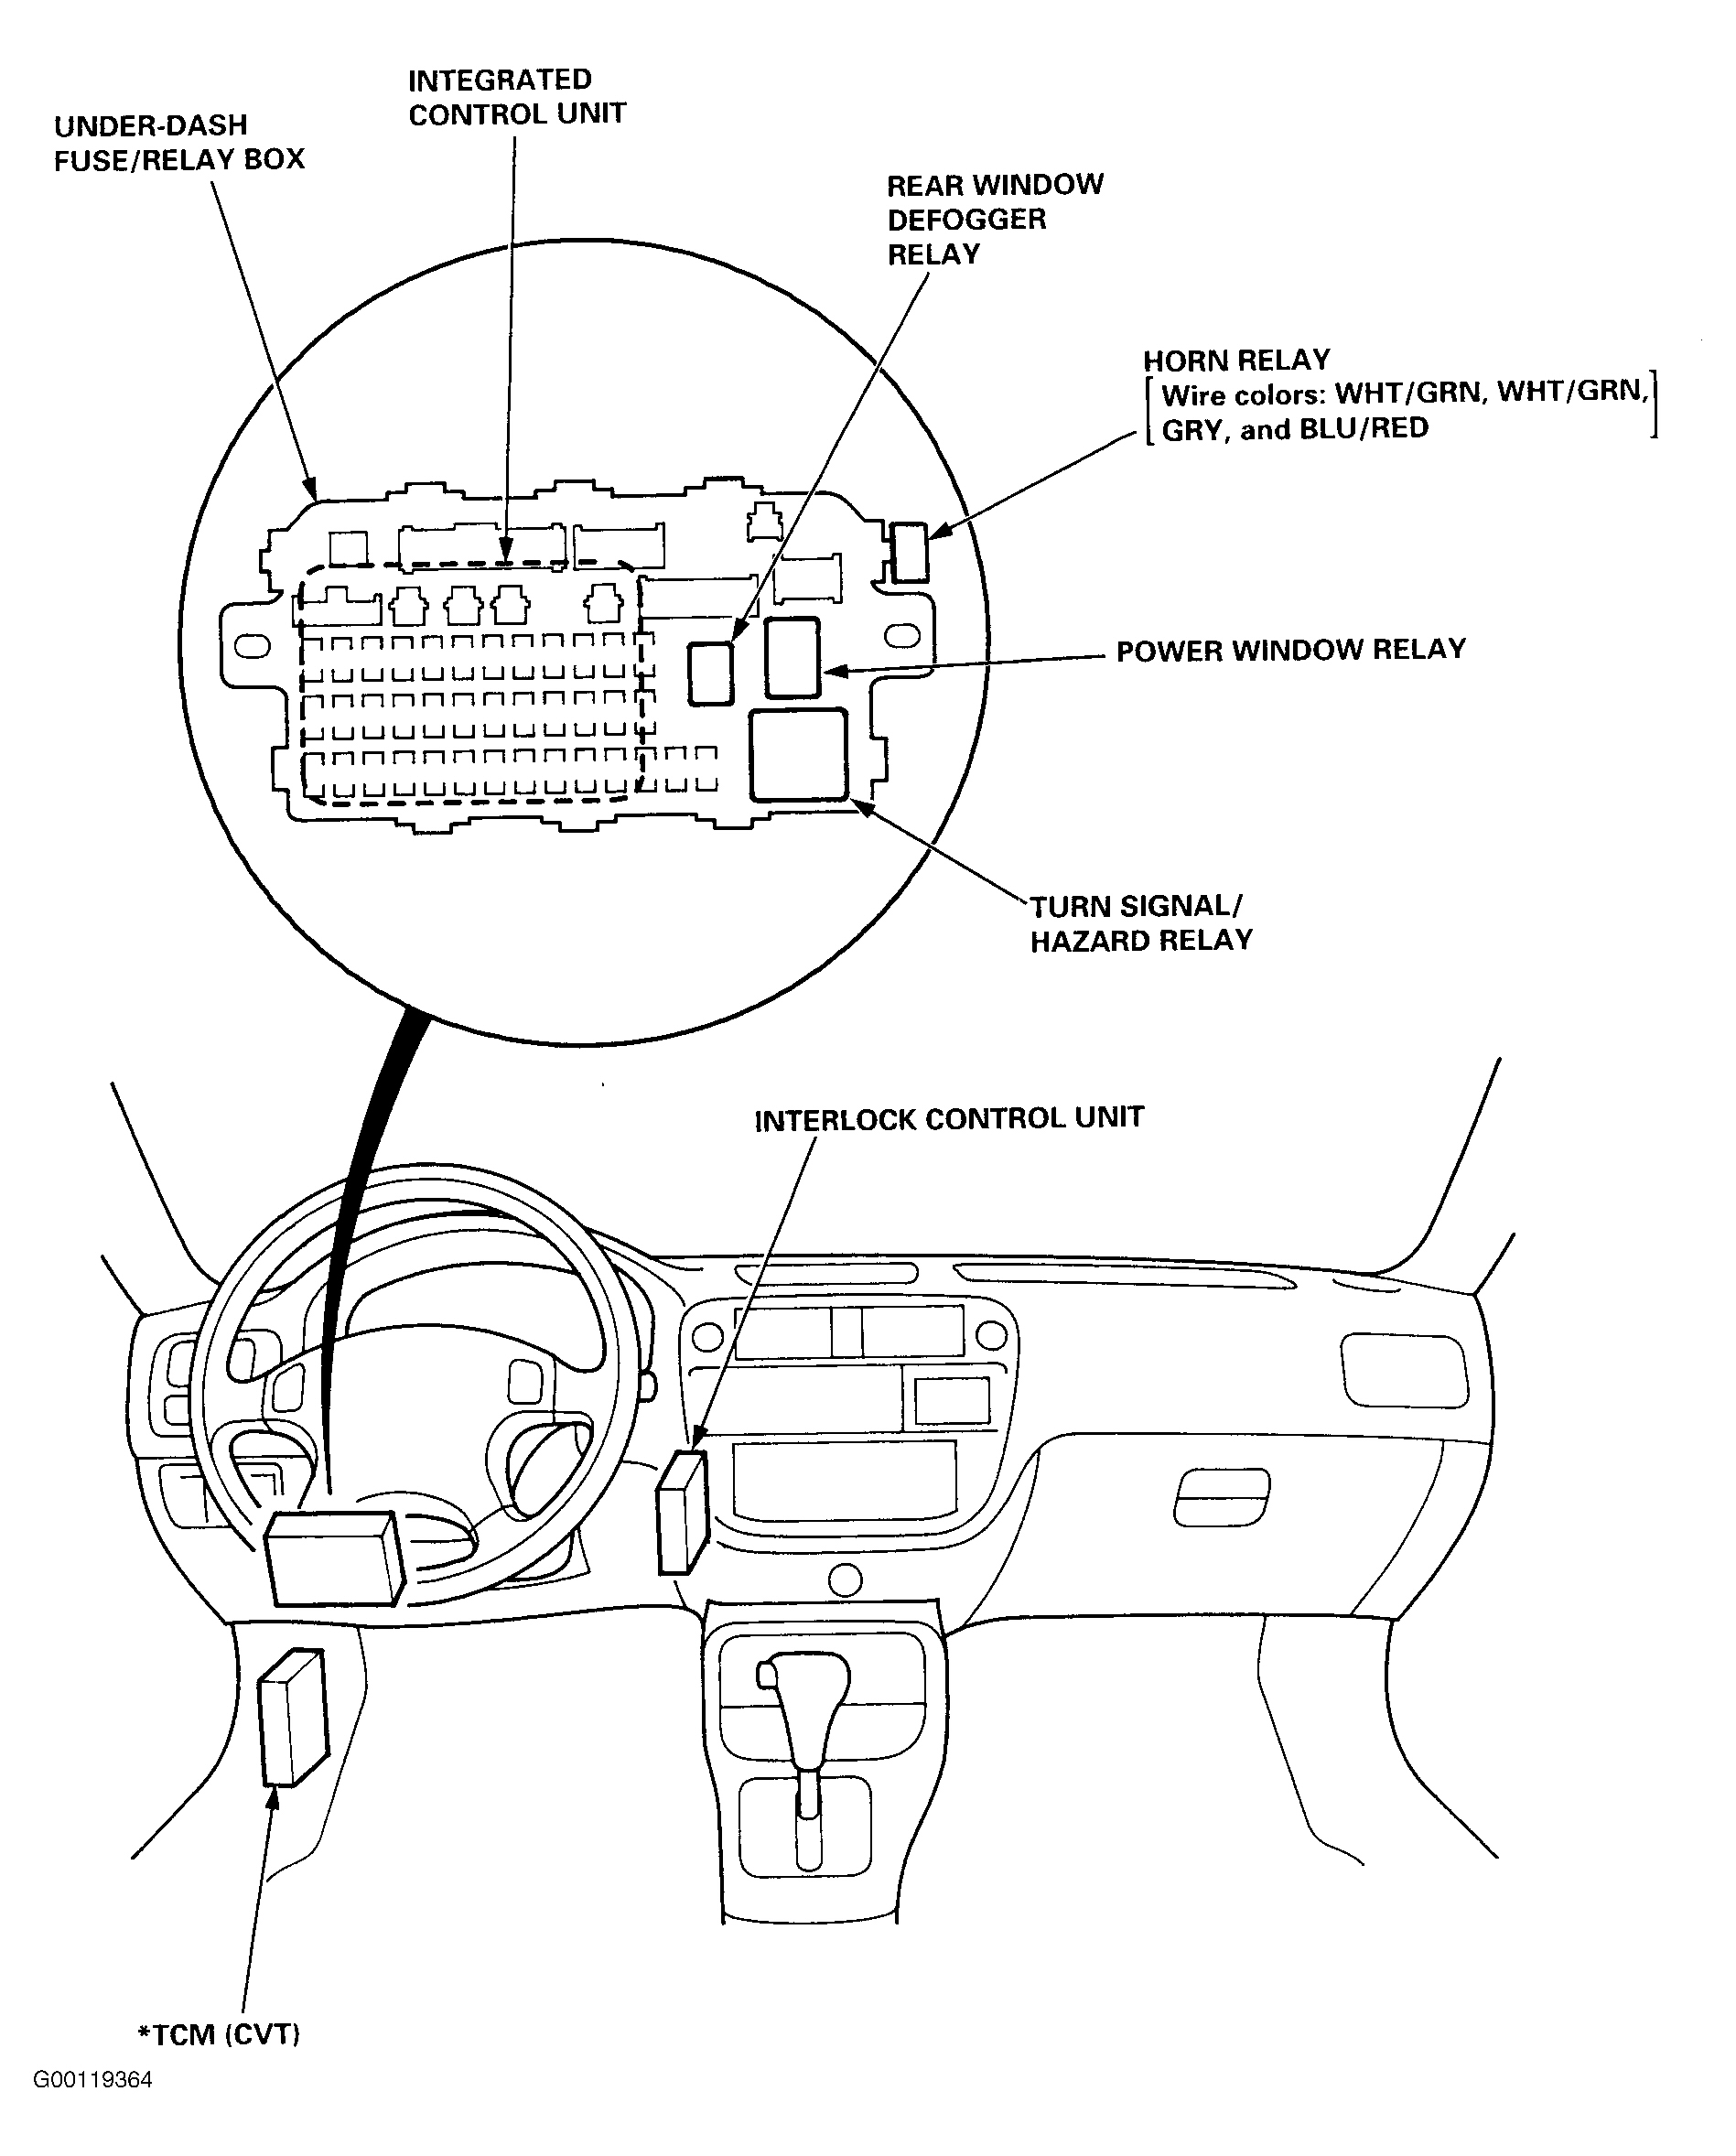 Honda Civic CX 1996 - Component Locations -  Locating Under-Dash Fuse/Relay Box (1996-97)